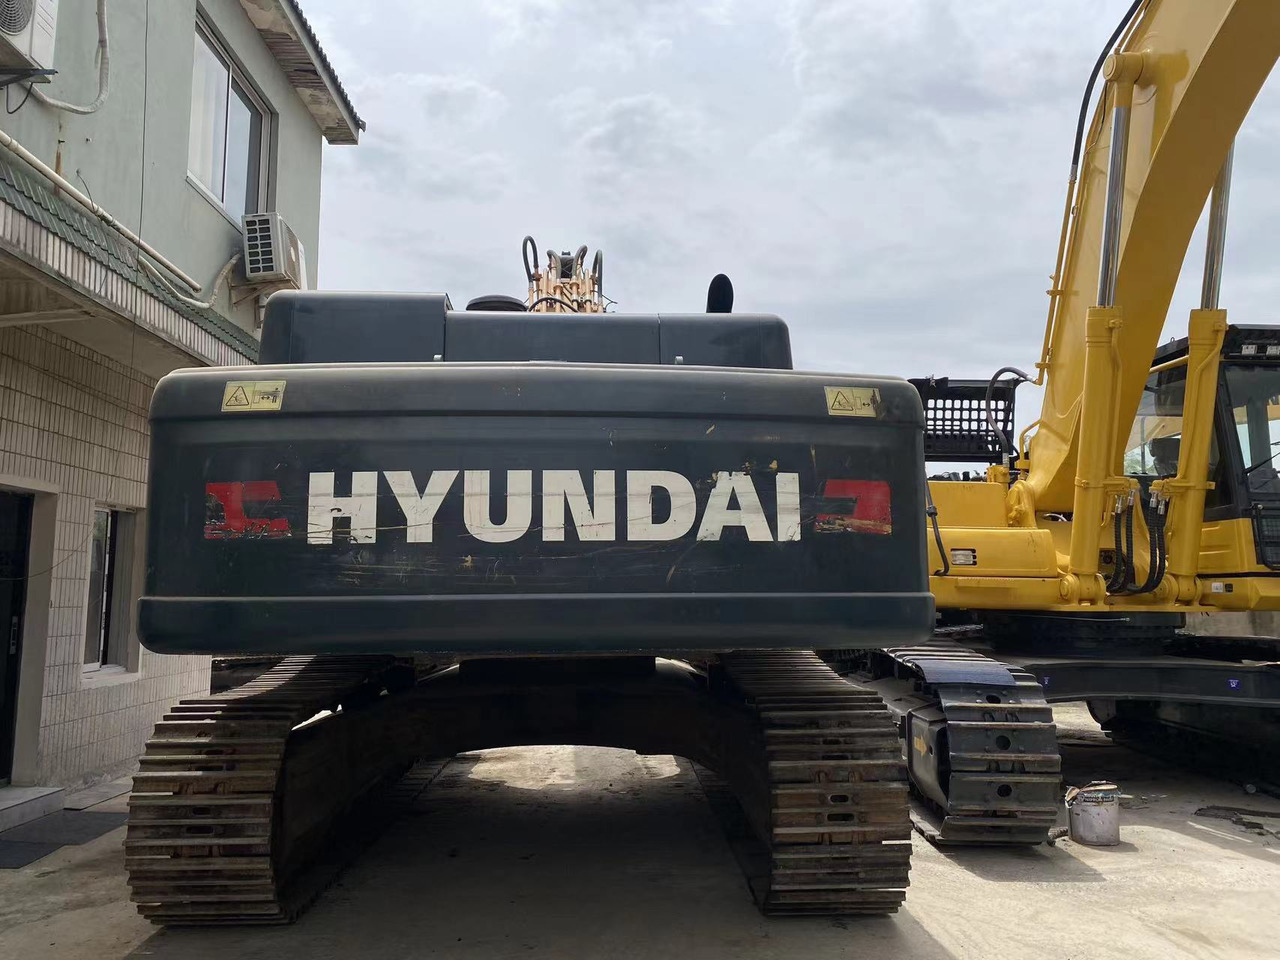 Гусеничный экскаватор Korea made HYUNDAI used excavator good condition R485LVS best service on sale: фото 3